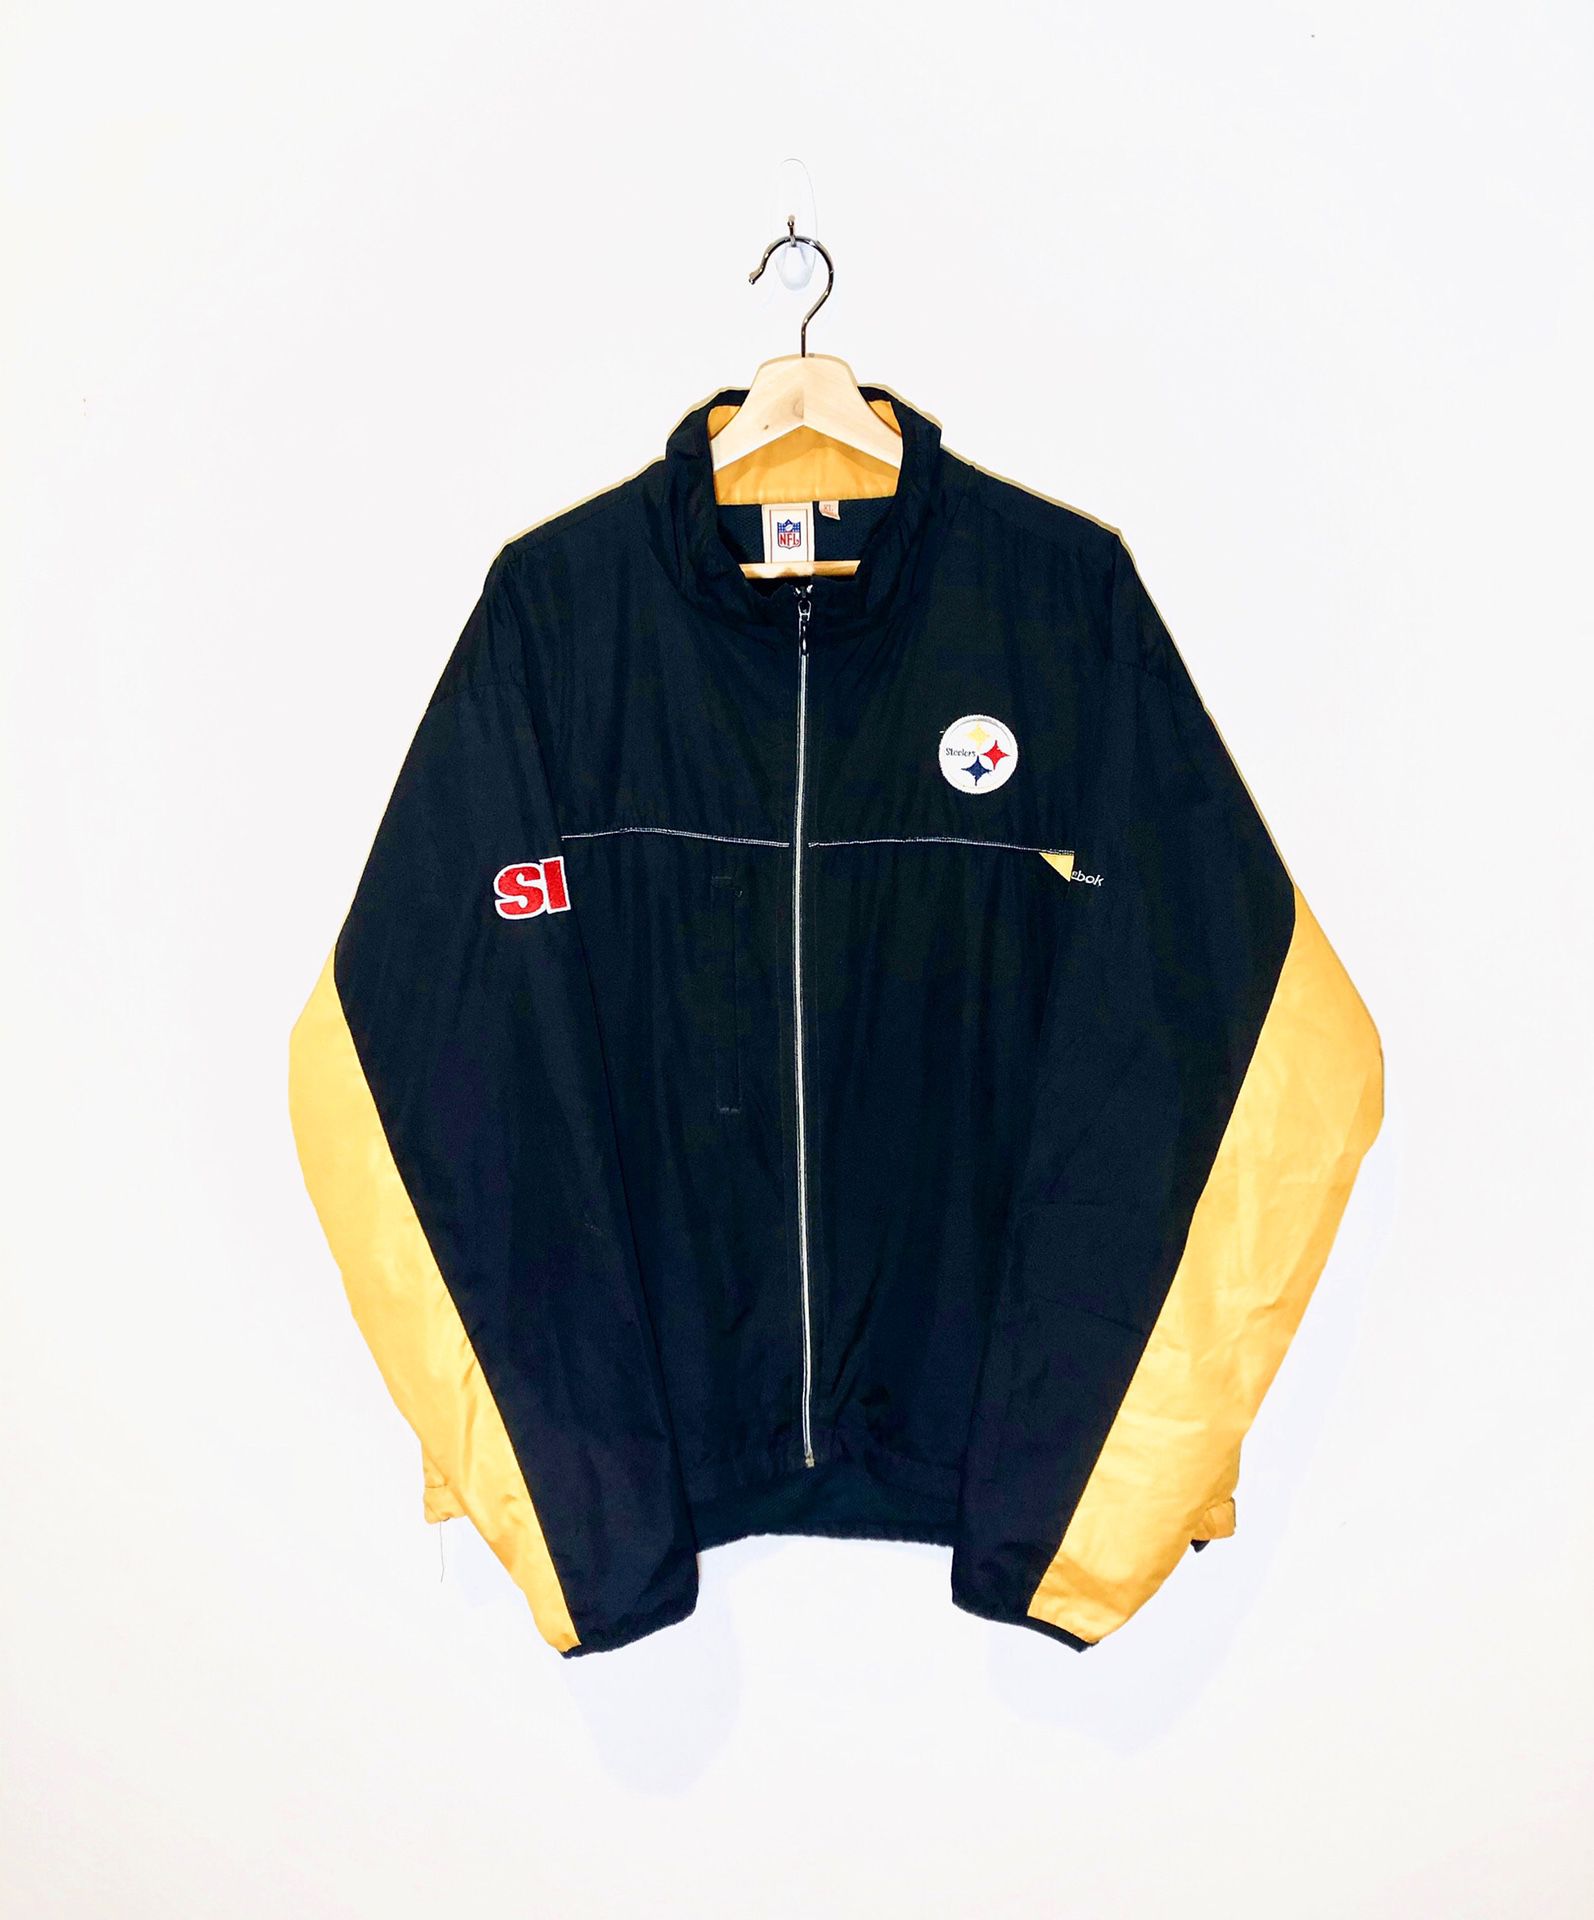 Vintage Steelers Jacket